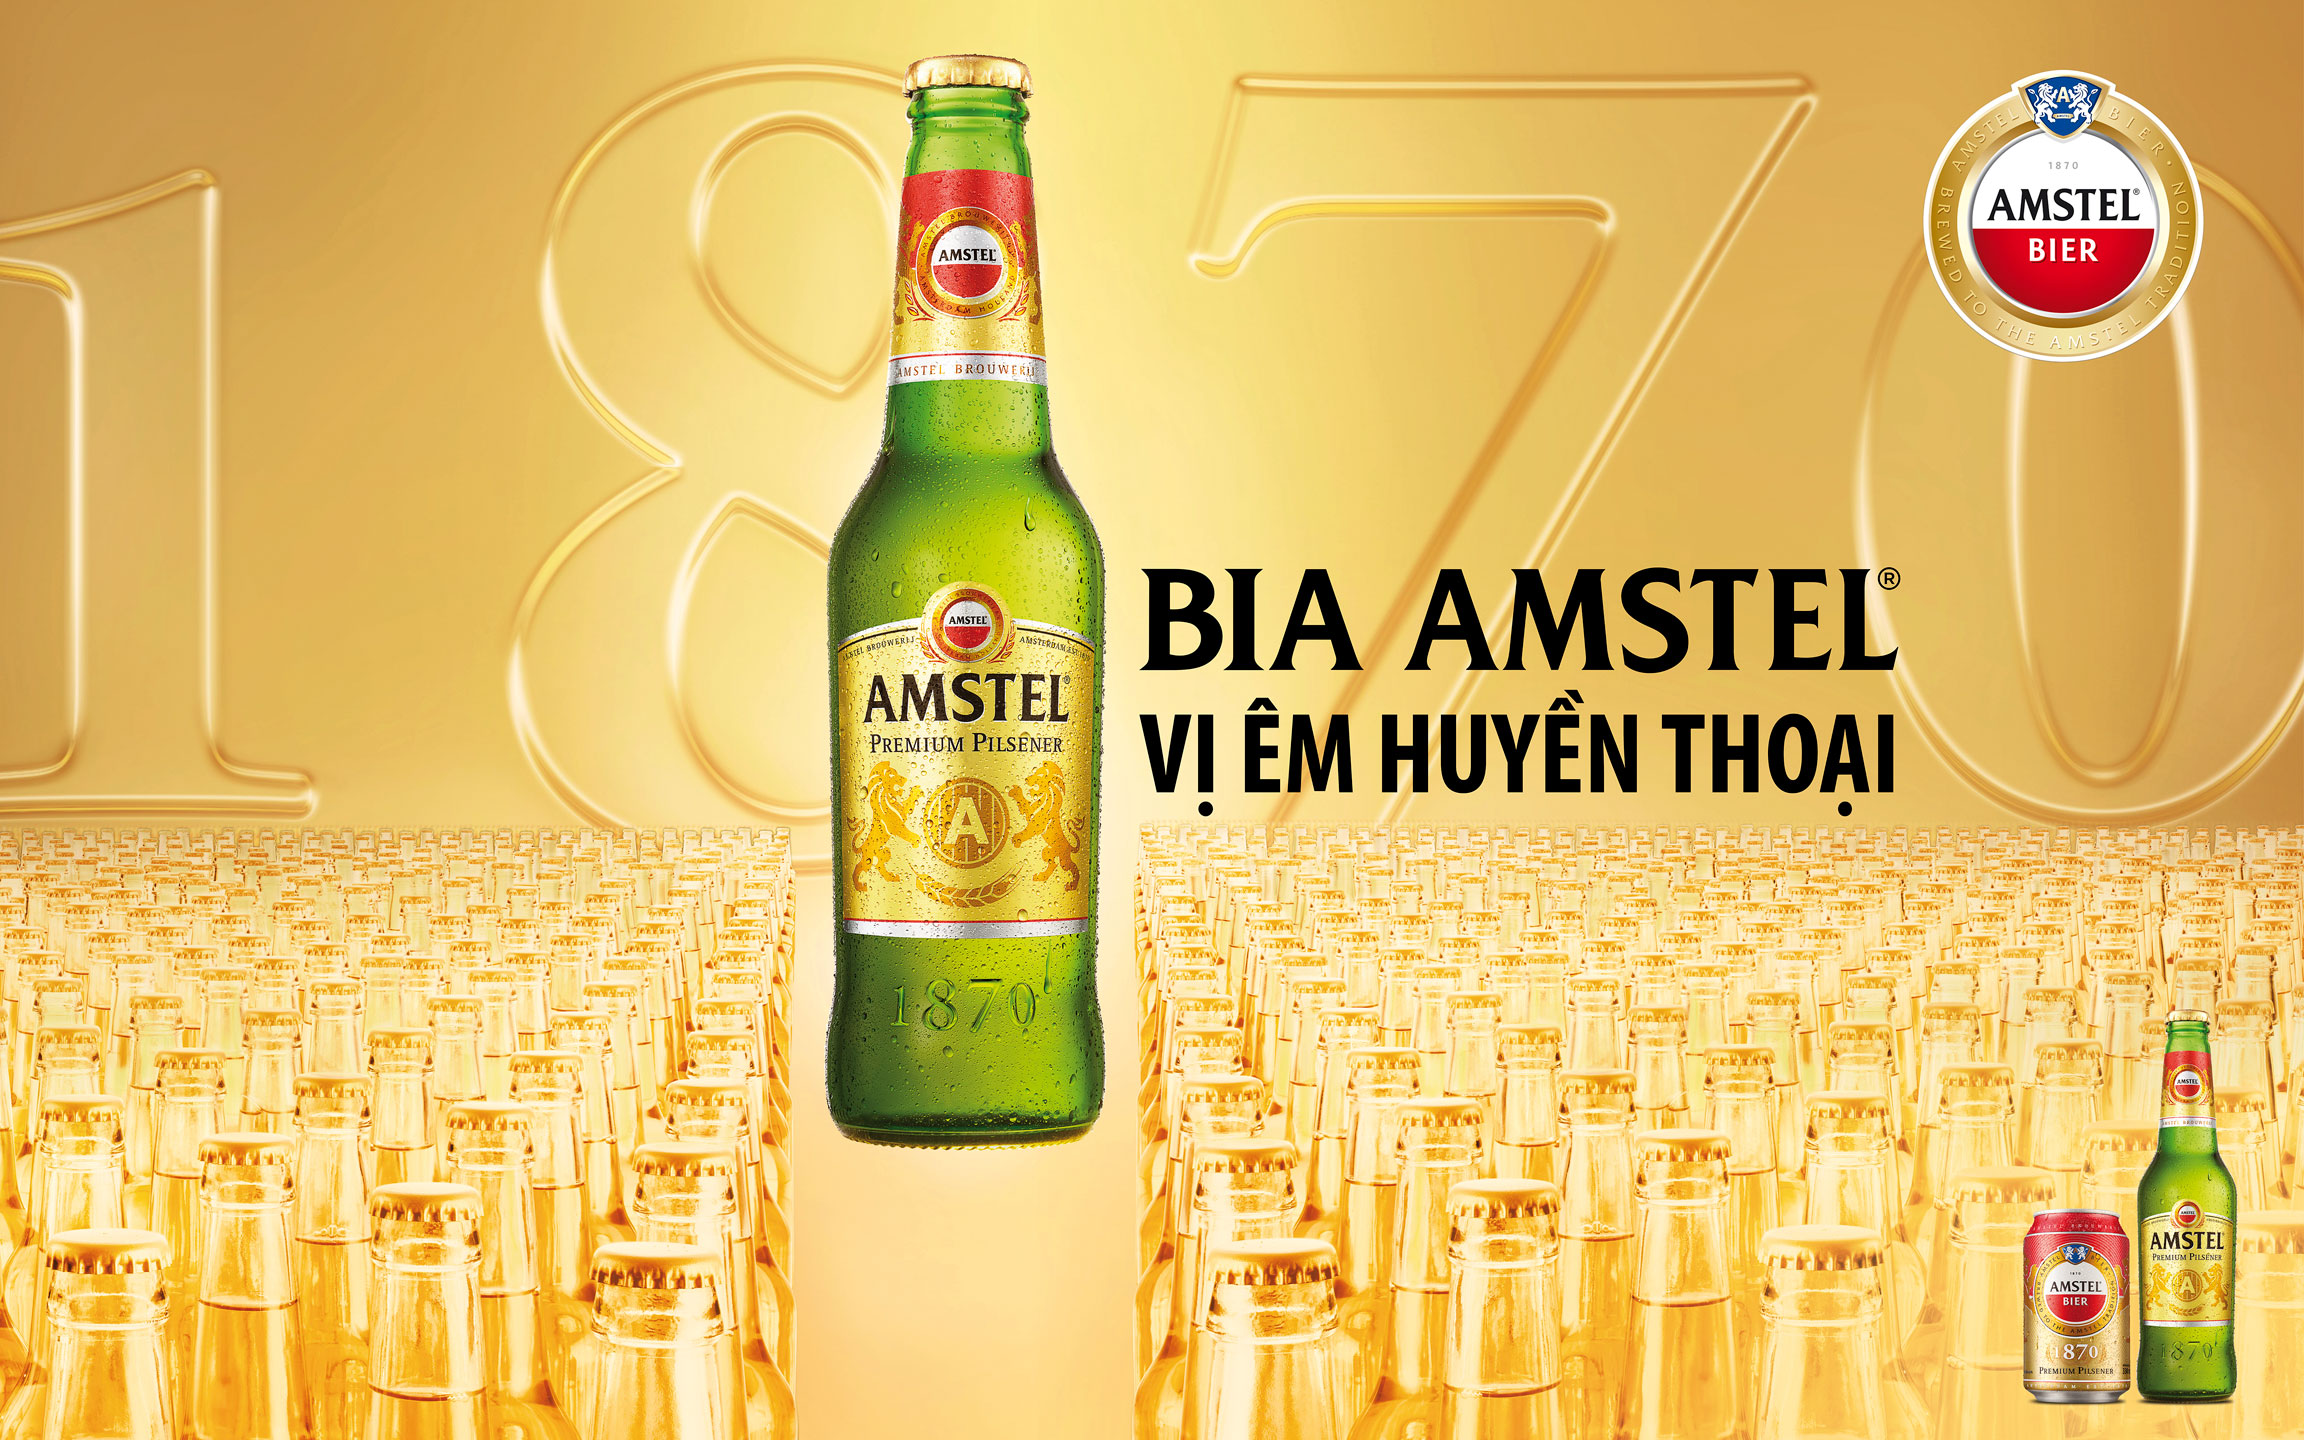 t106_Amstel_KV_Bottles_WingChan